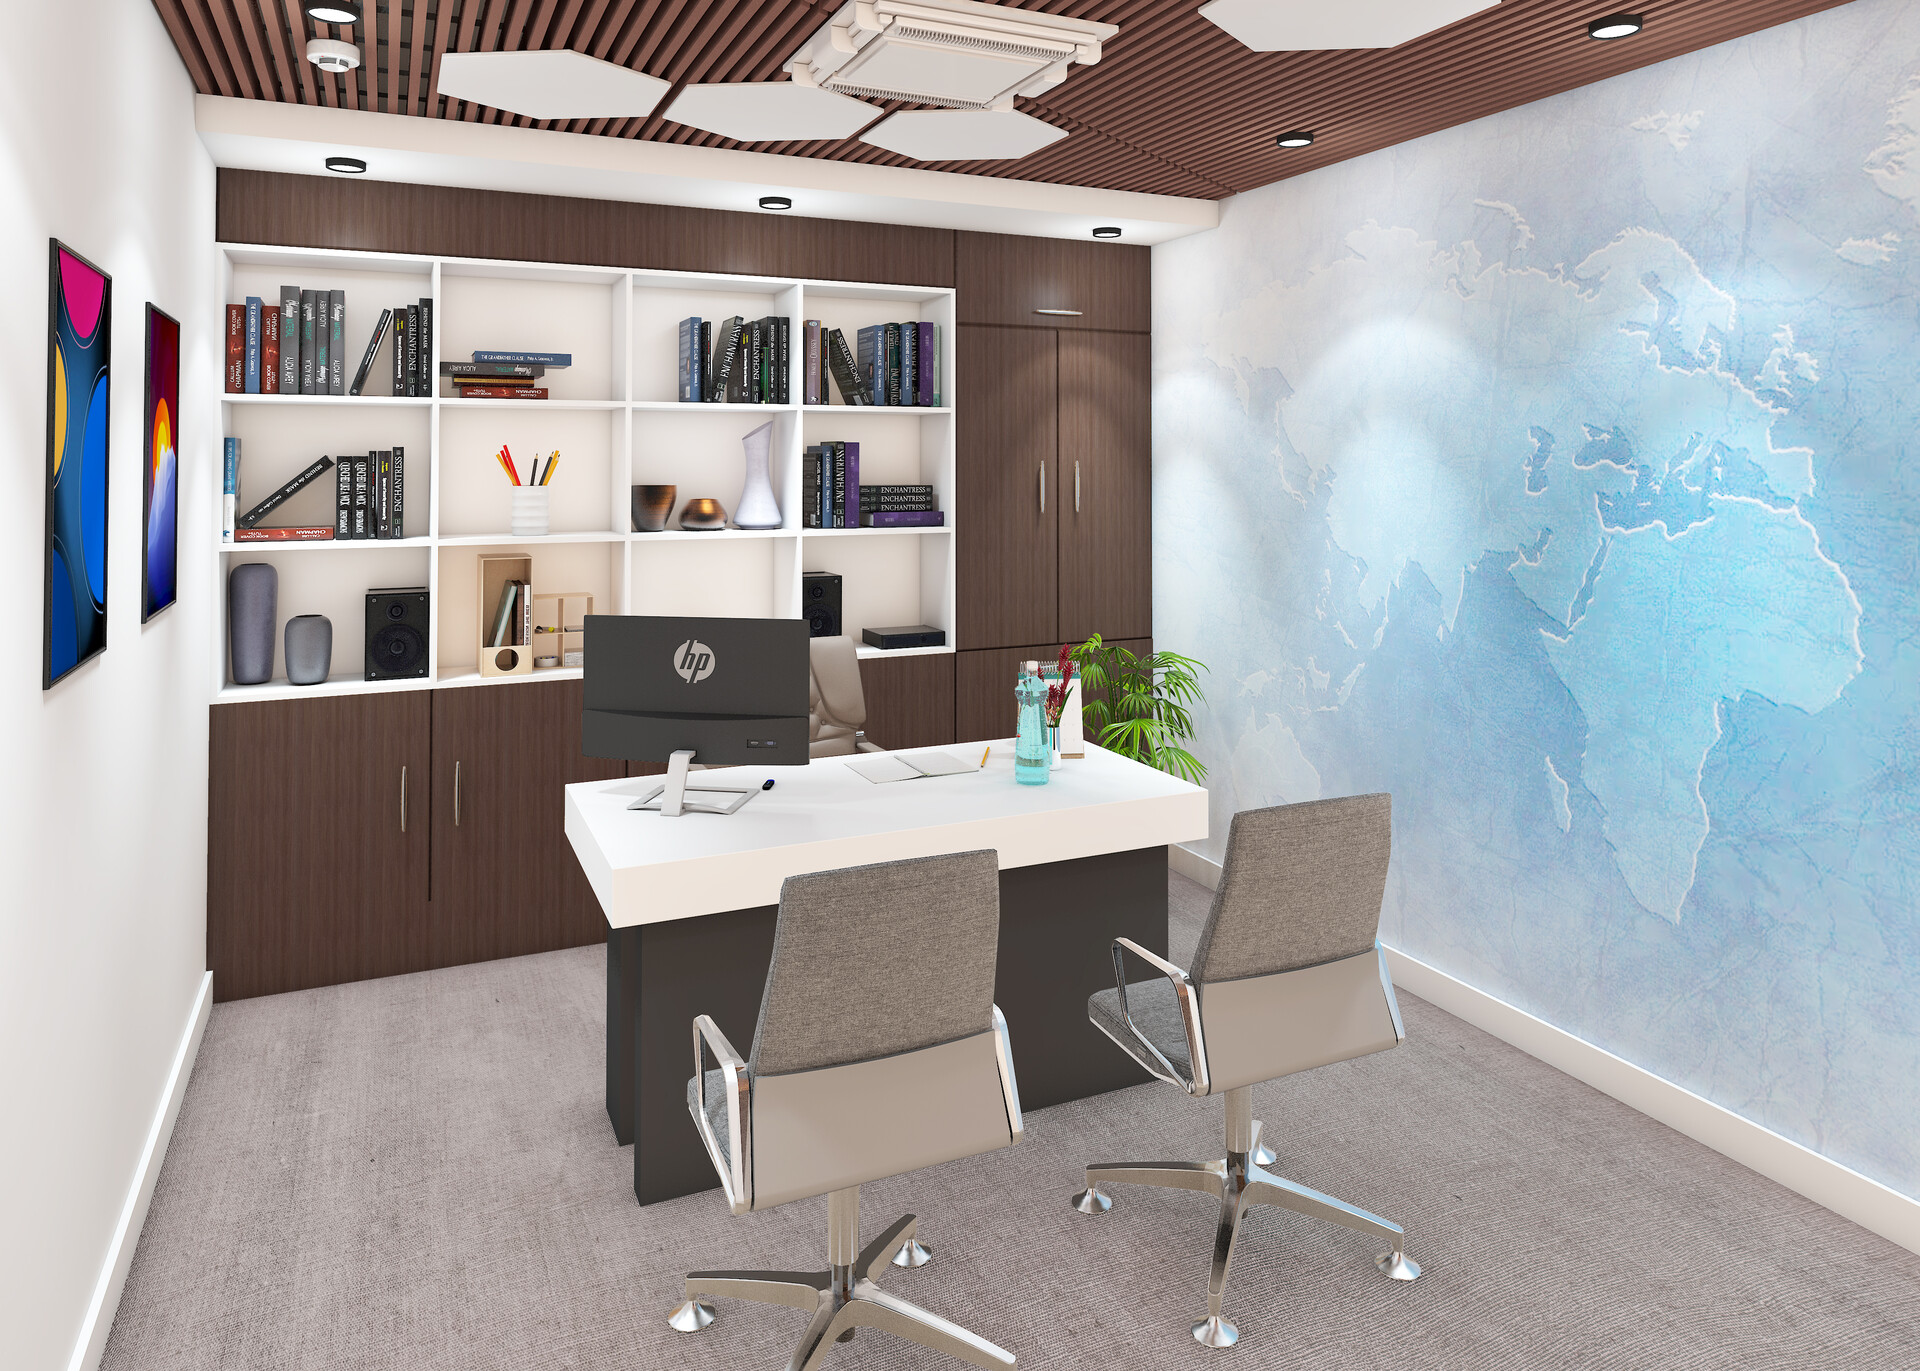 Office Interior Design  500 square feet  CivilLane